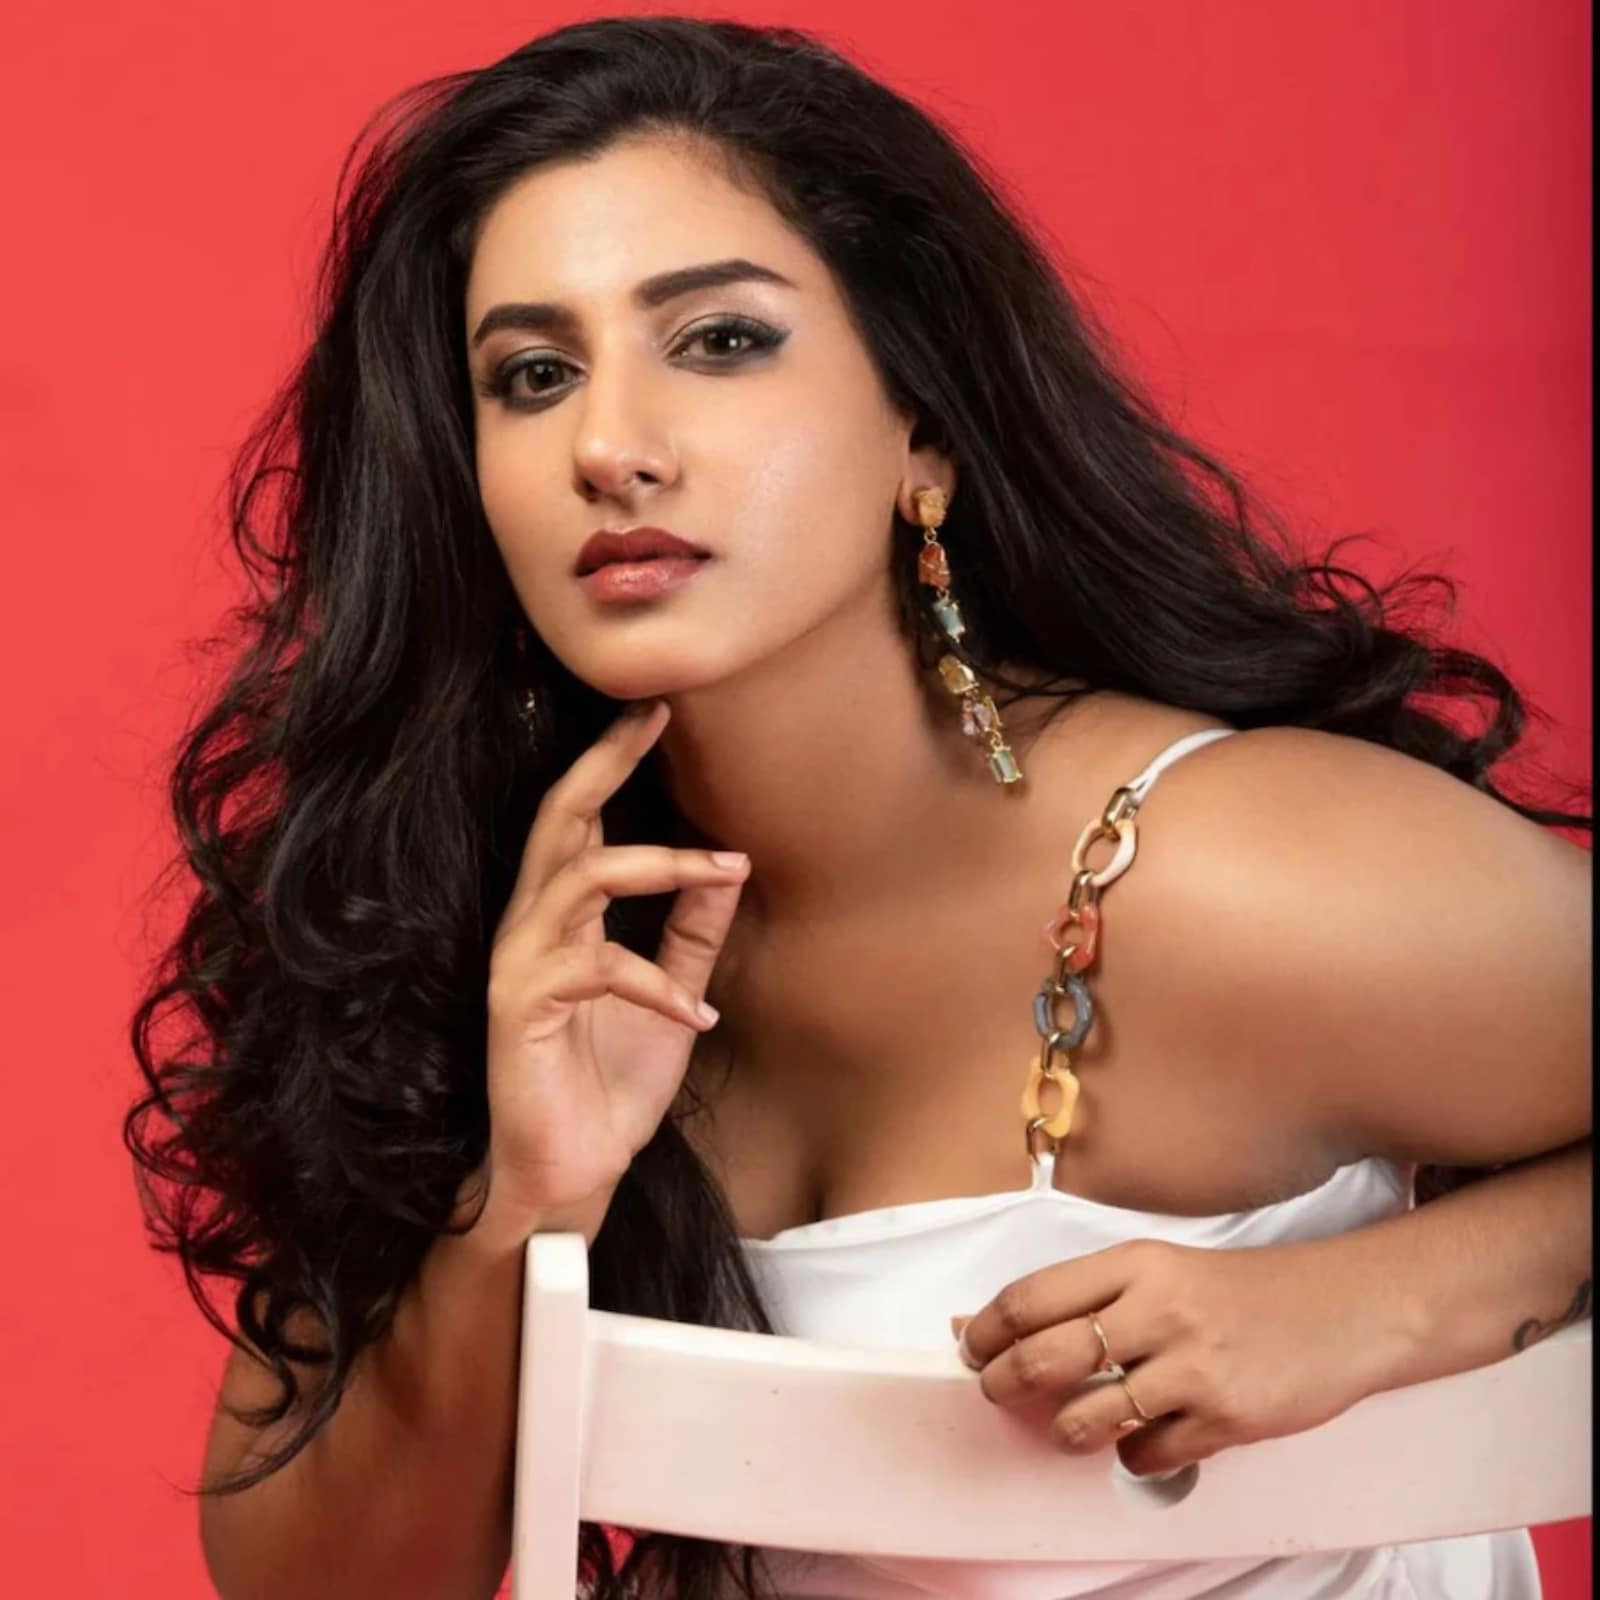 Vishnu Priya Sex Videos - Actress Vishnupriya's Stunning Pictures In White Mini-Dress Resurface On The  Internet - News18